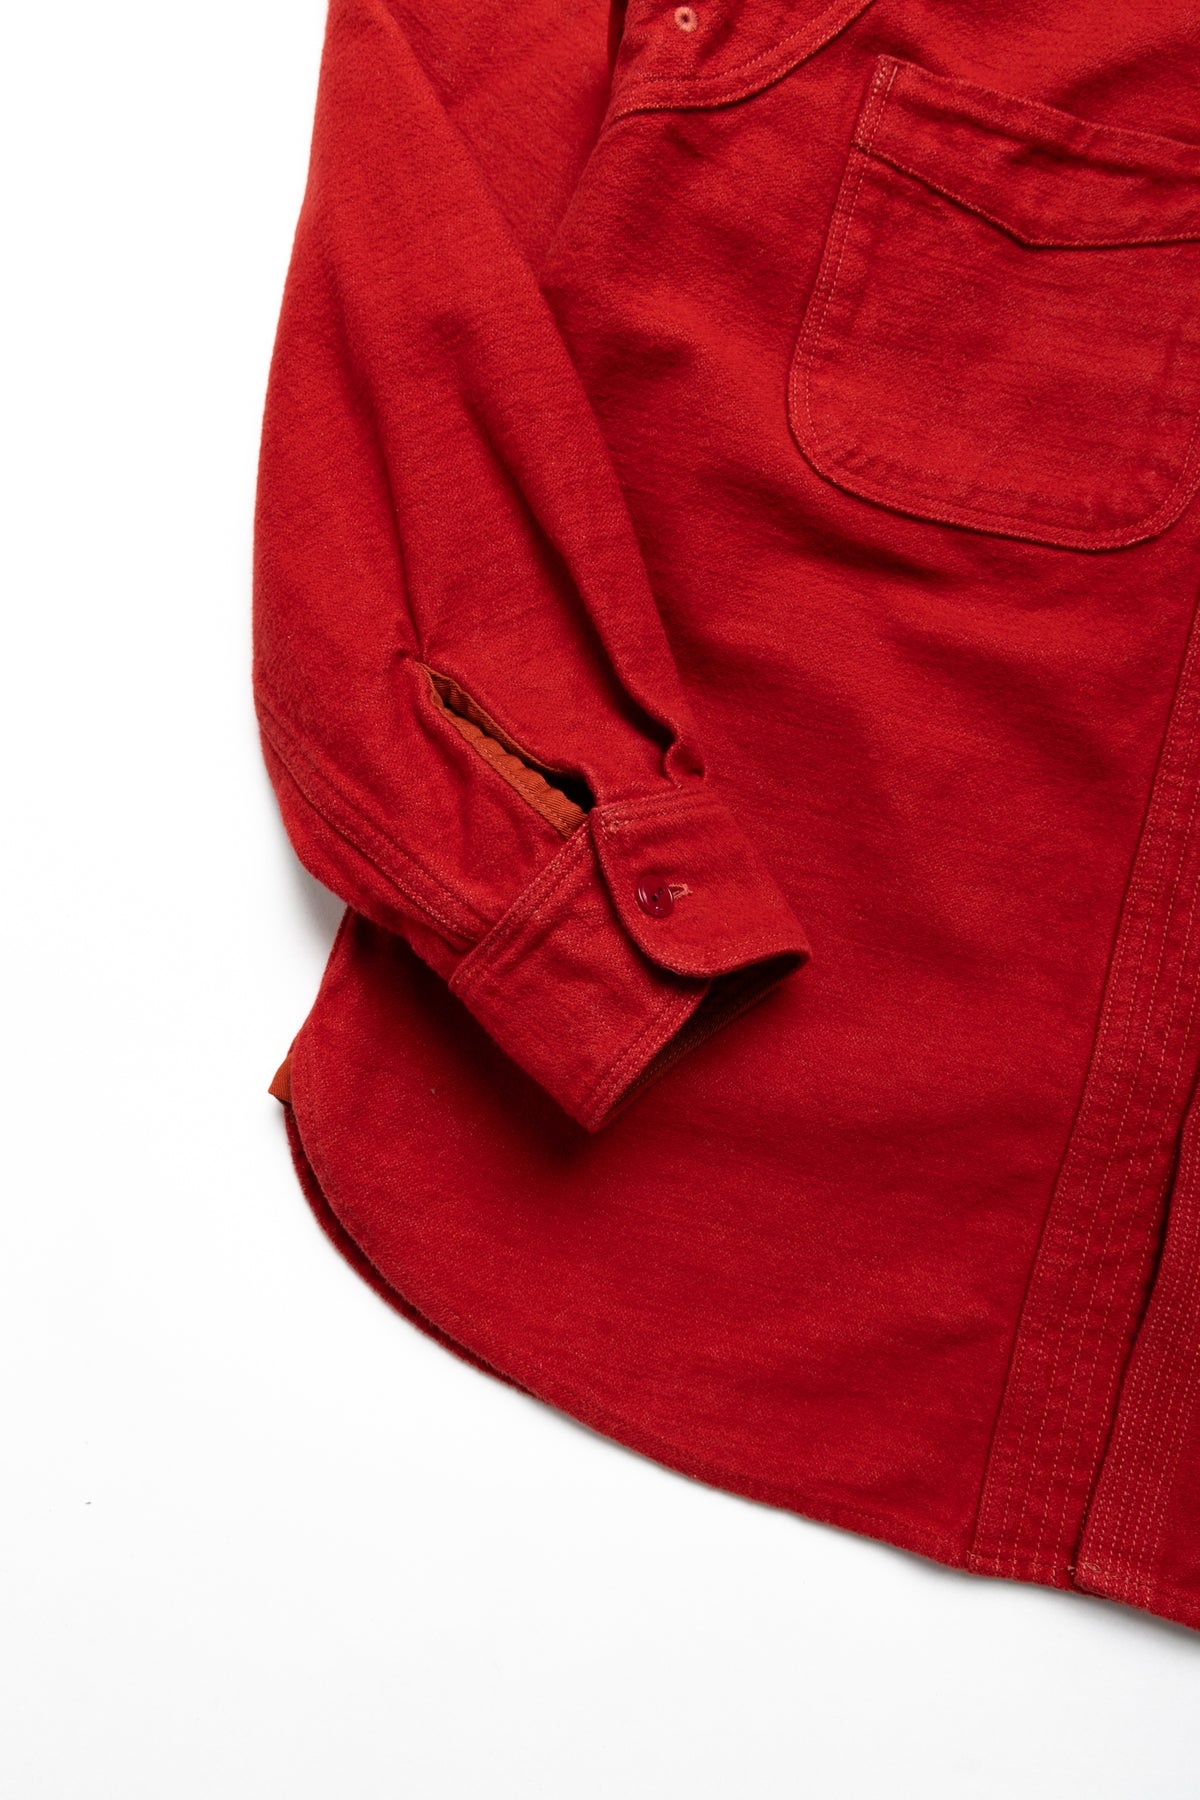 CPO Cotton Wool MOPAR Shirt - Red - 11